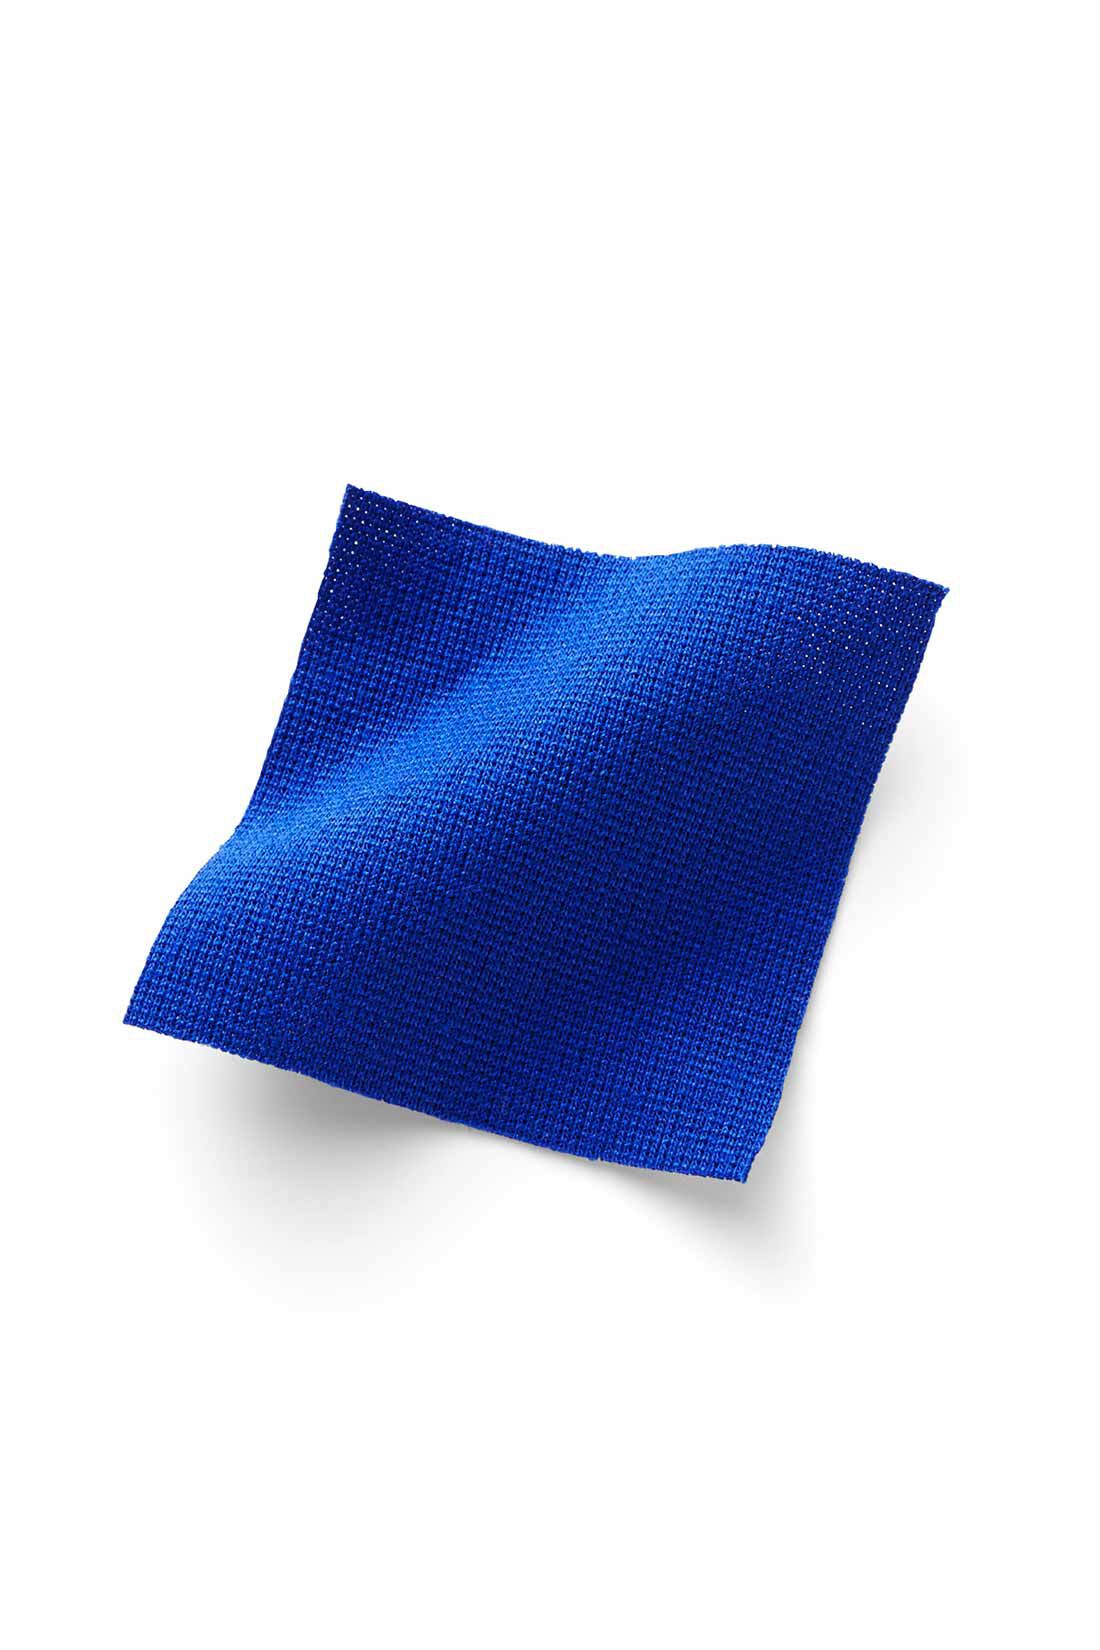 IEDIT|IEDIT[イディット]　きれいめカットソーでリラクシーな すそフレアーノースリーブワンピース〈ブルー〉|適度な厚みで、きれいな表面感のカットソーポンチ素材。